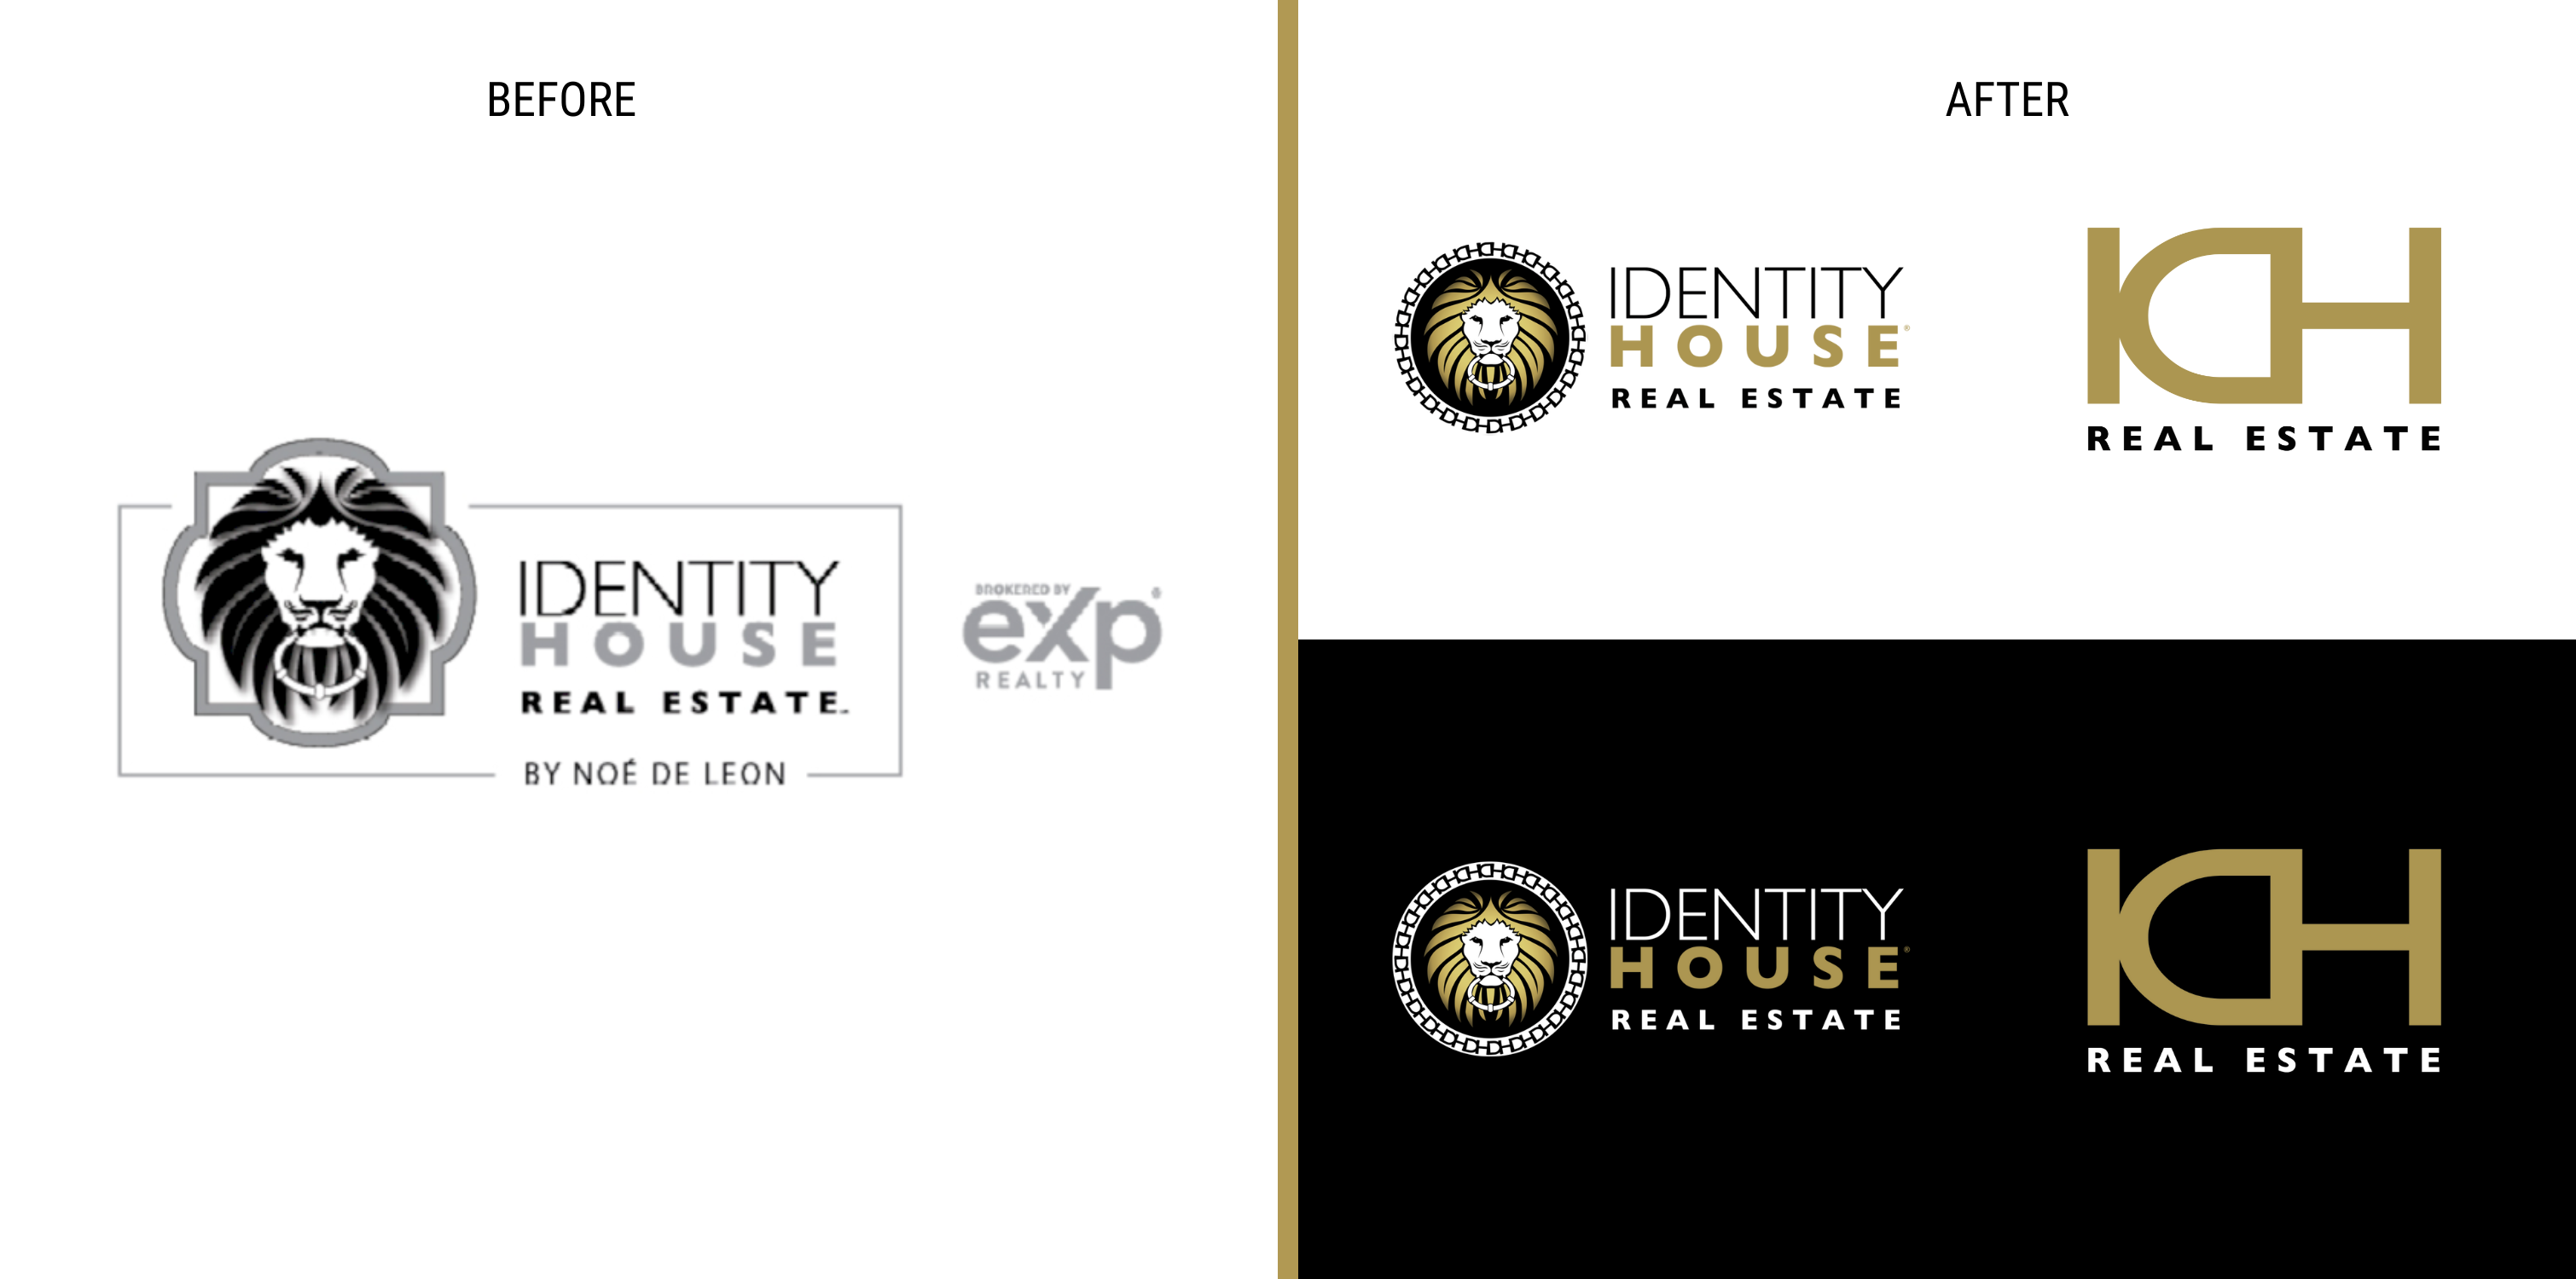 Identity House Remastered logos